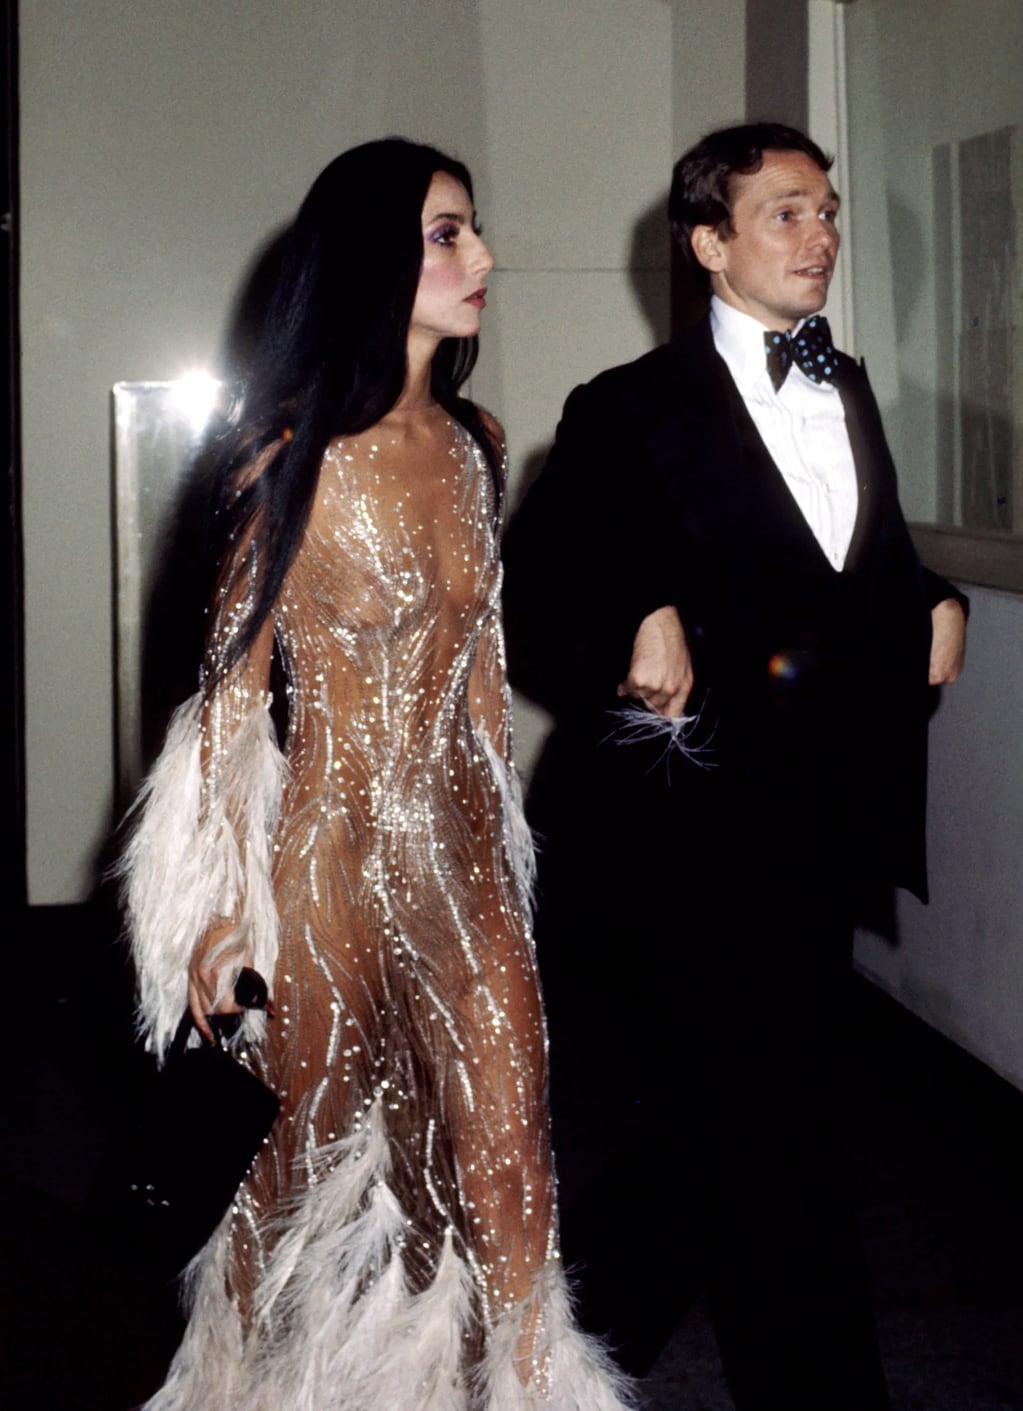 La icónica Cher en la Met Gala. / Archivo